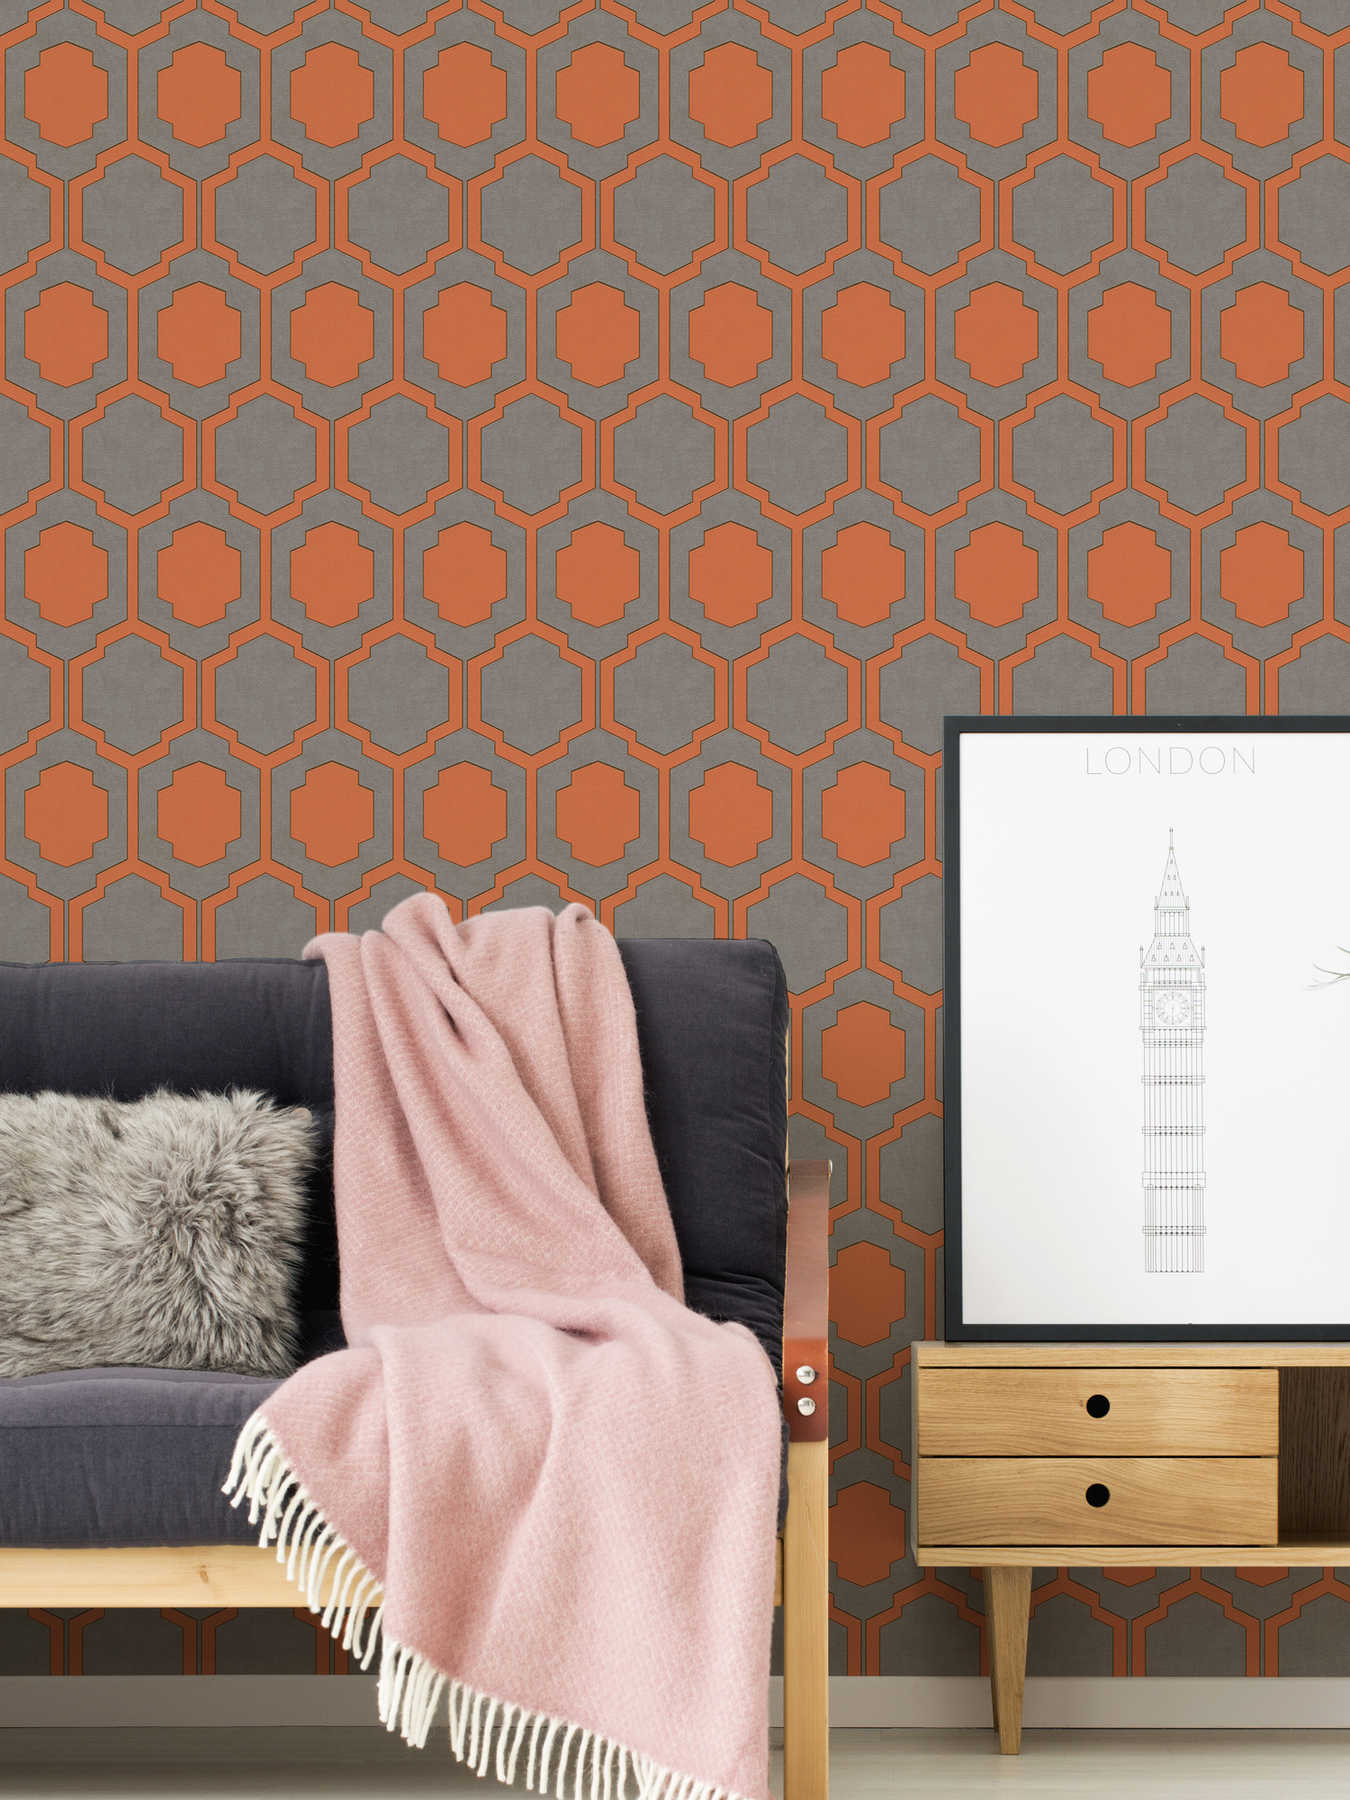             Pattern wallpaper retro look - orange, grey, beige
        